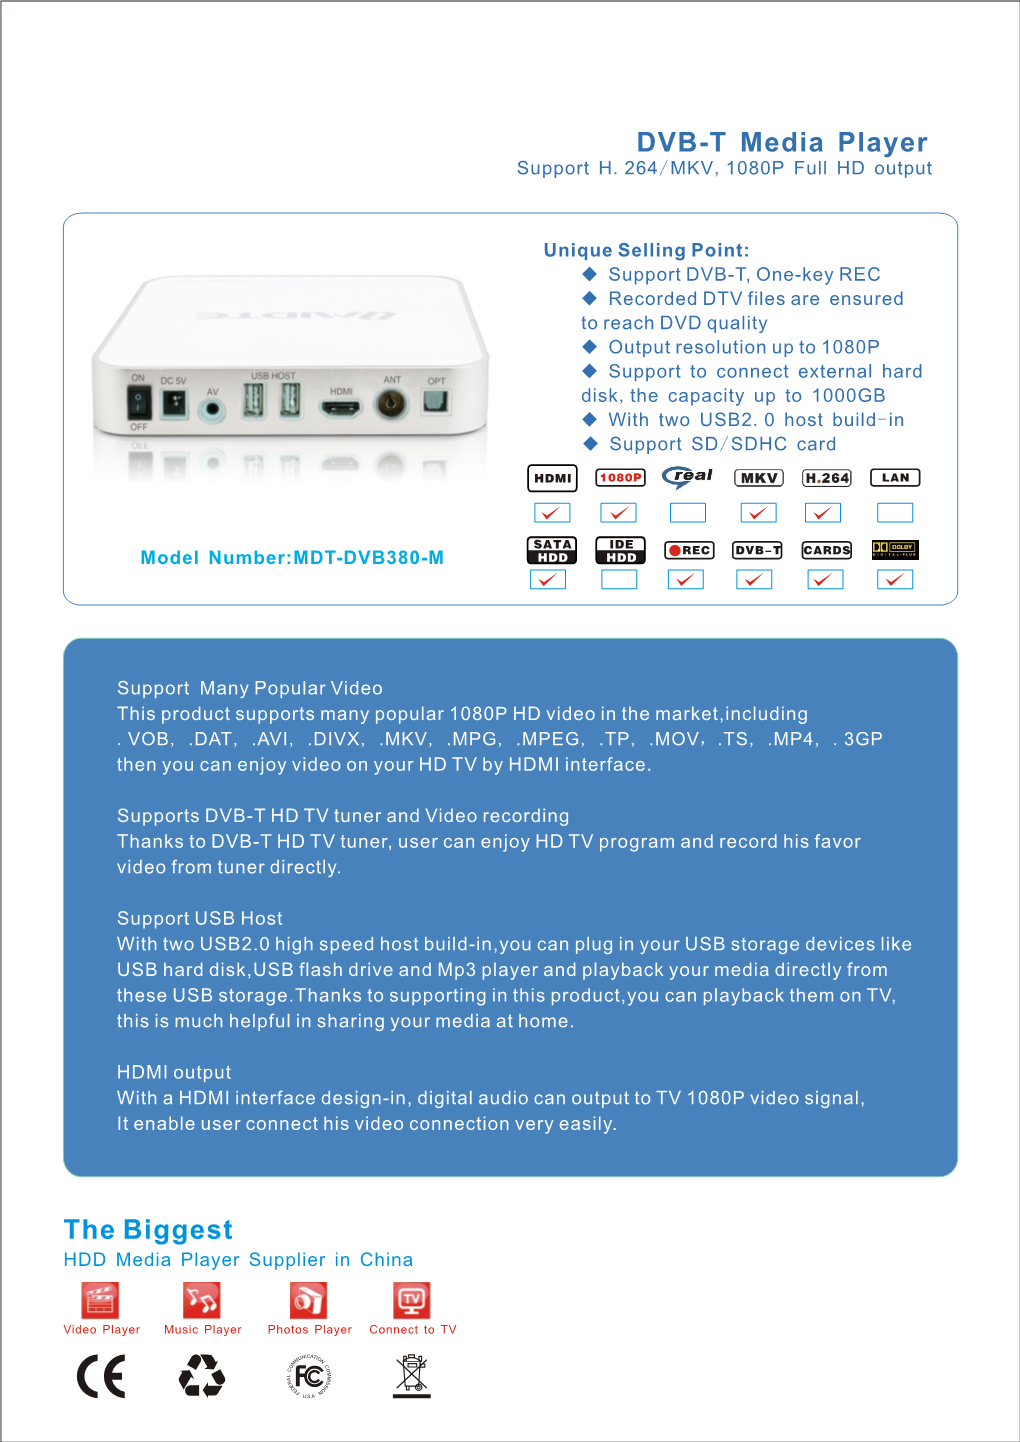 DVB-T Media Player the Biggest ISO 9001